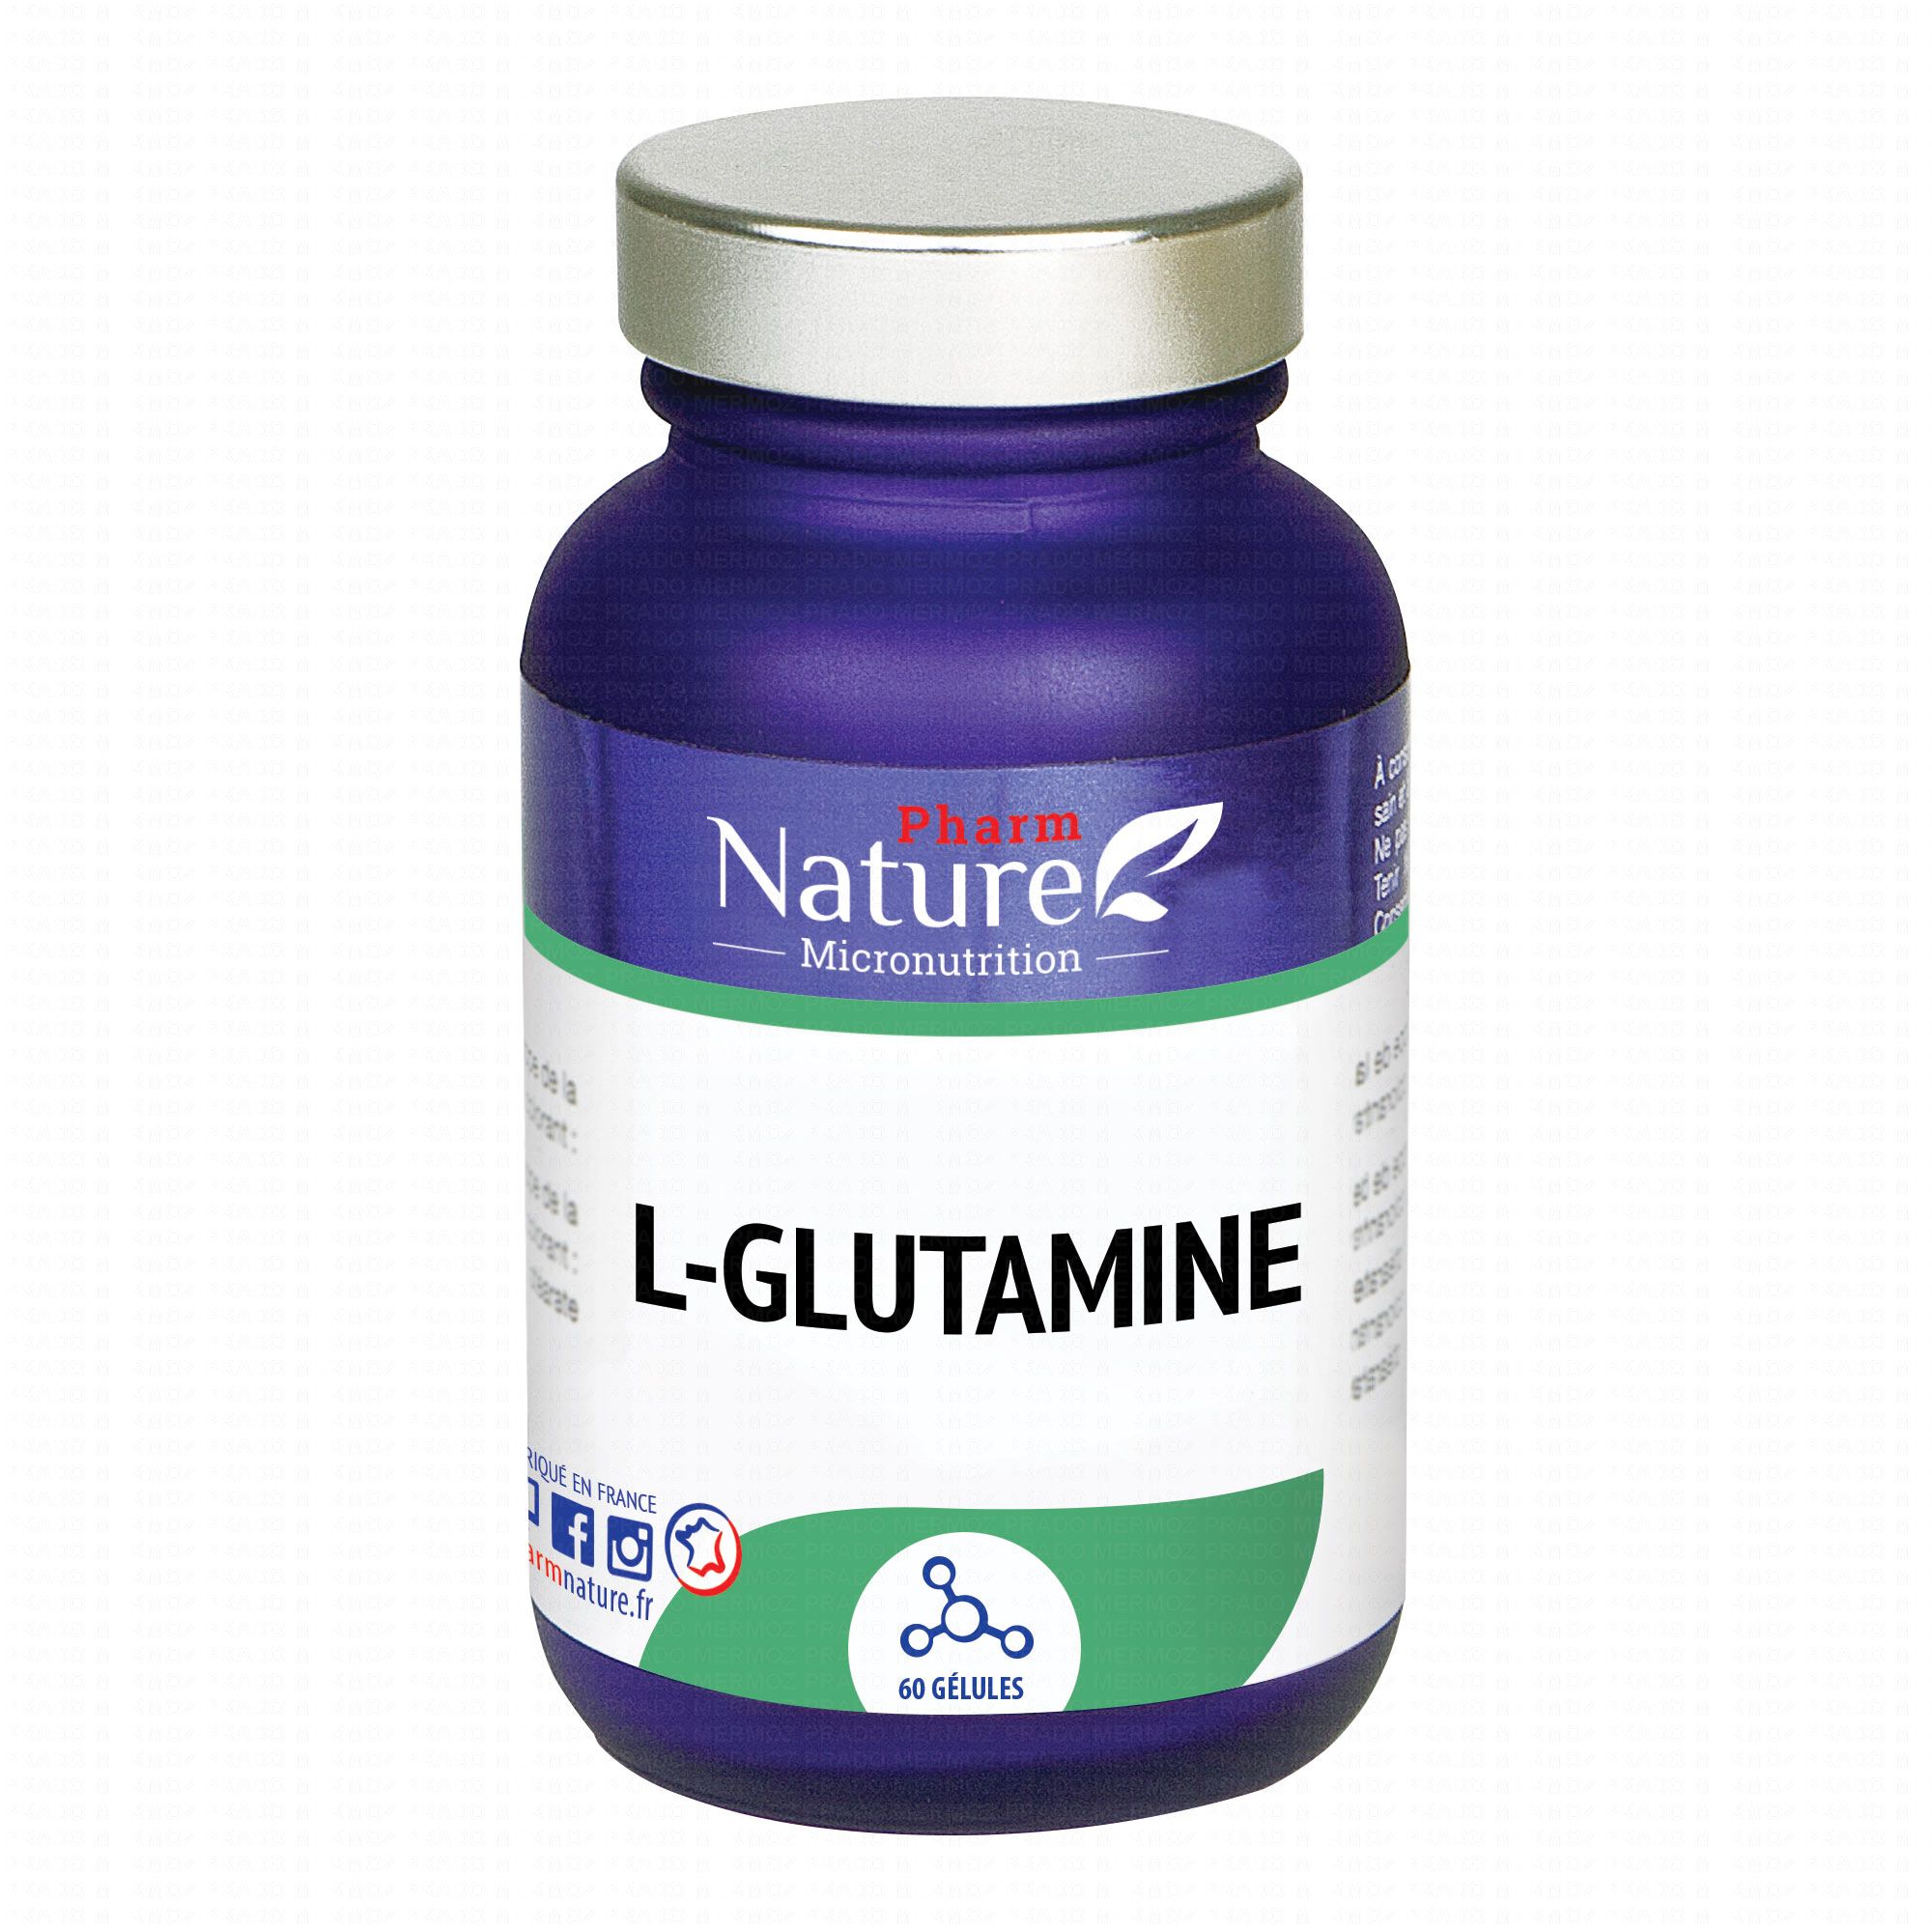 PHARM NATURE MICRONUTRITION L-Glutamine 60 Gélules